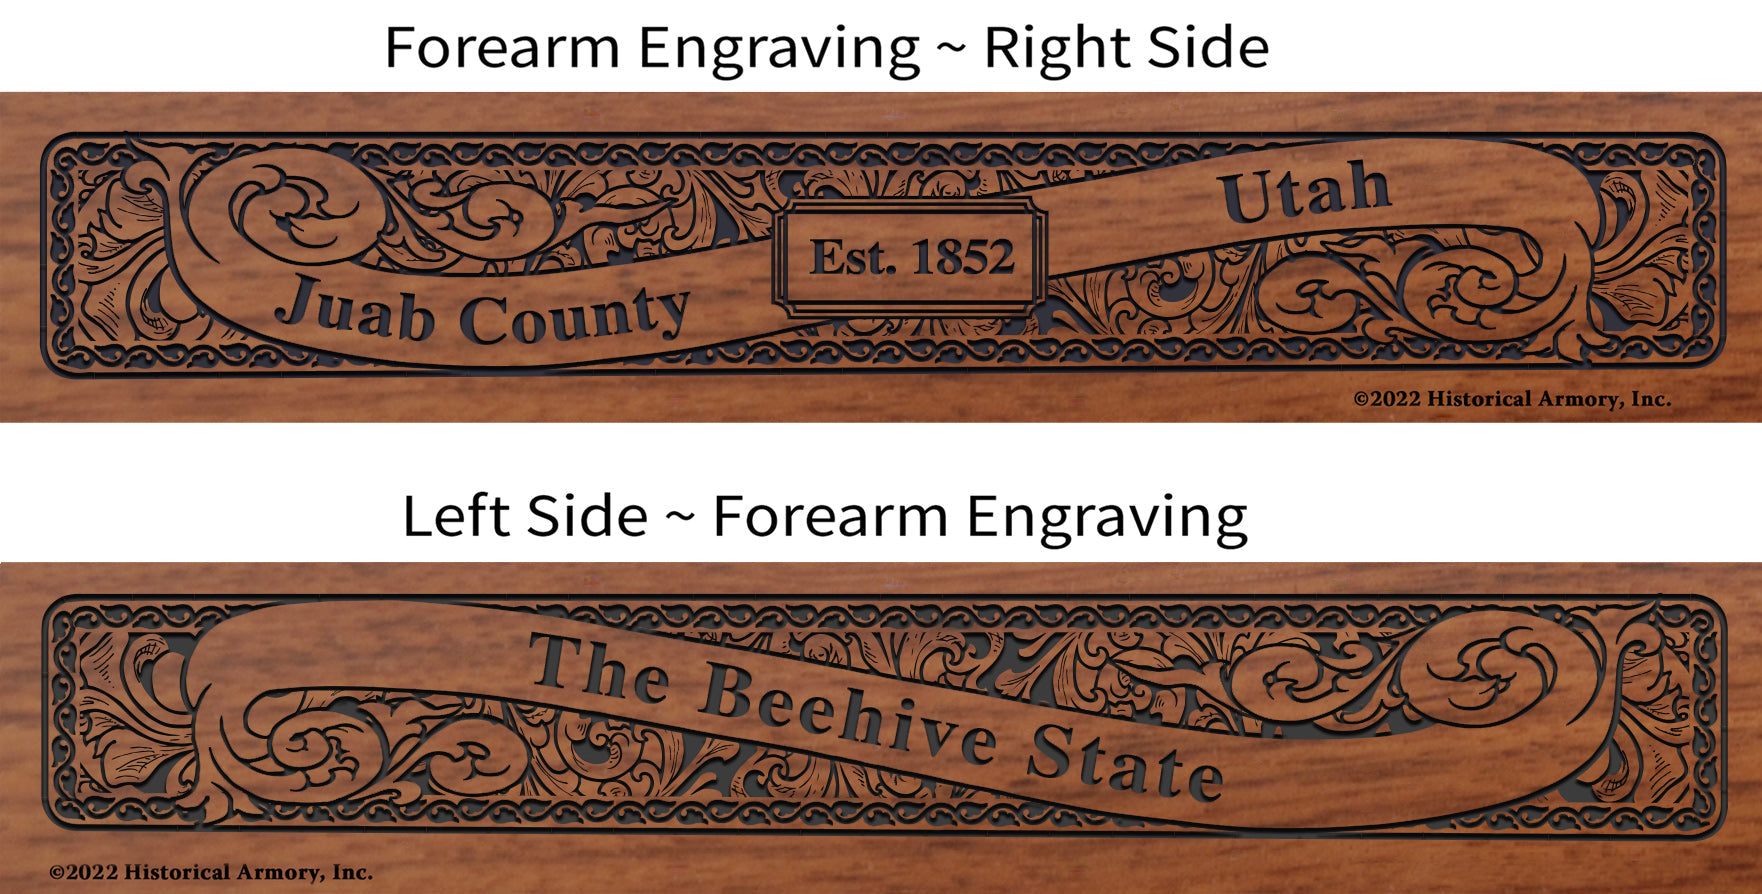 Juab County Utah Engraved Rifle Forearm